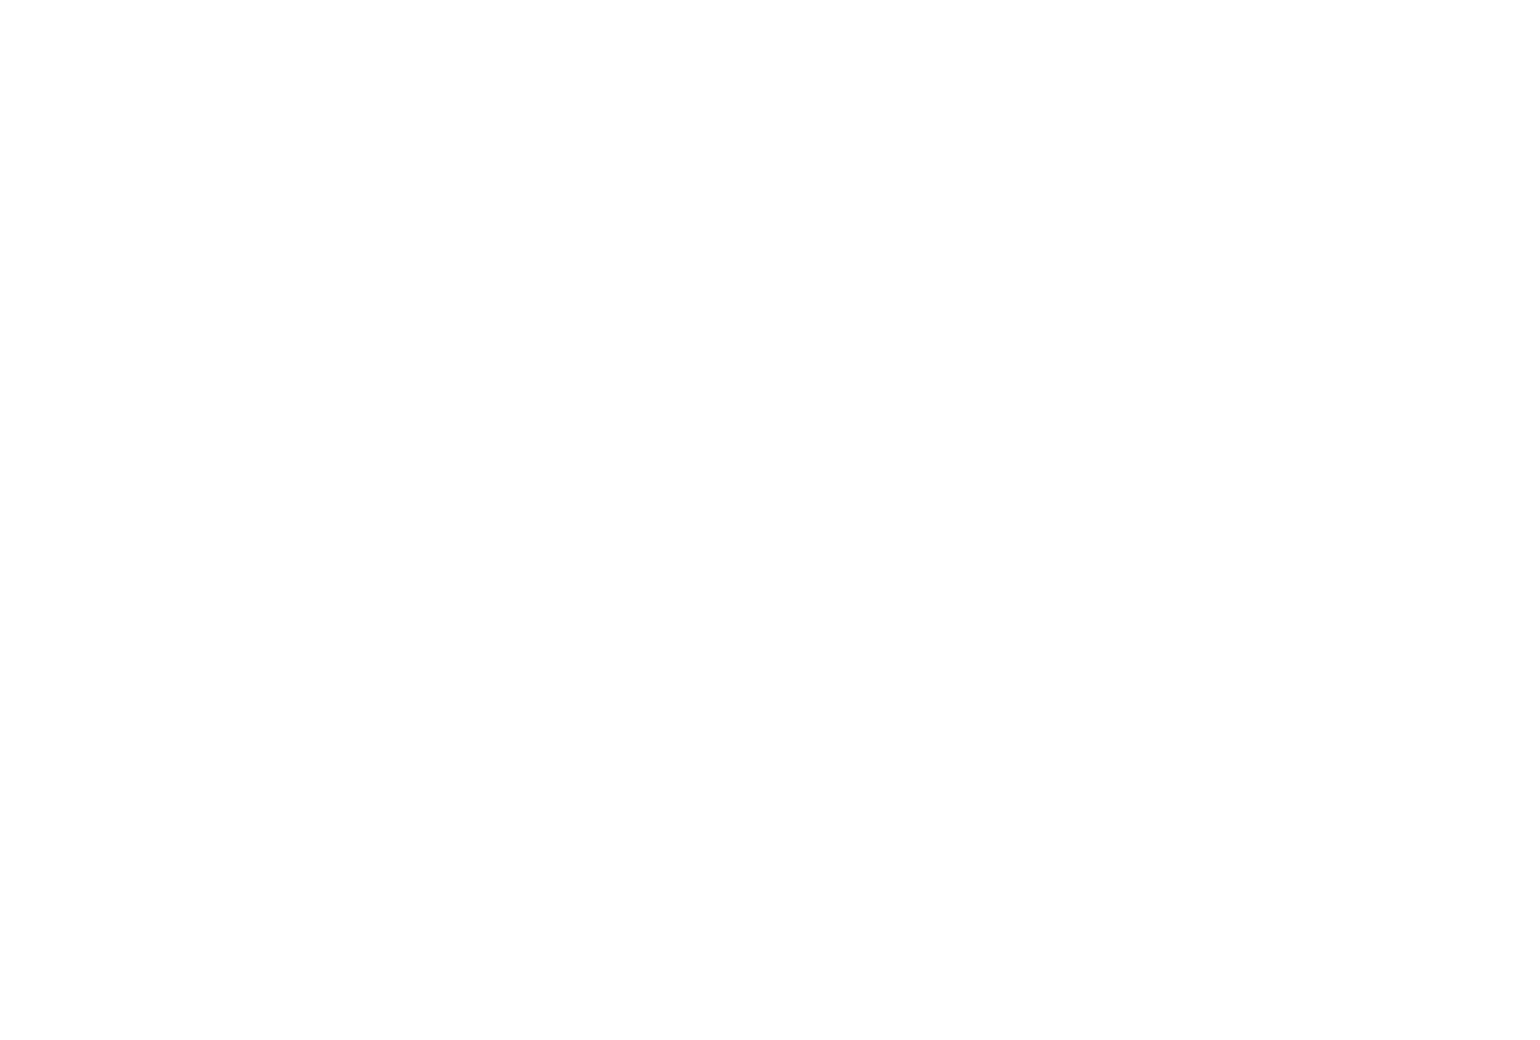 Emirates Telecom (Etisalat Group) logo pour fonds sombres (PNG transparent)